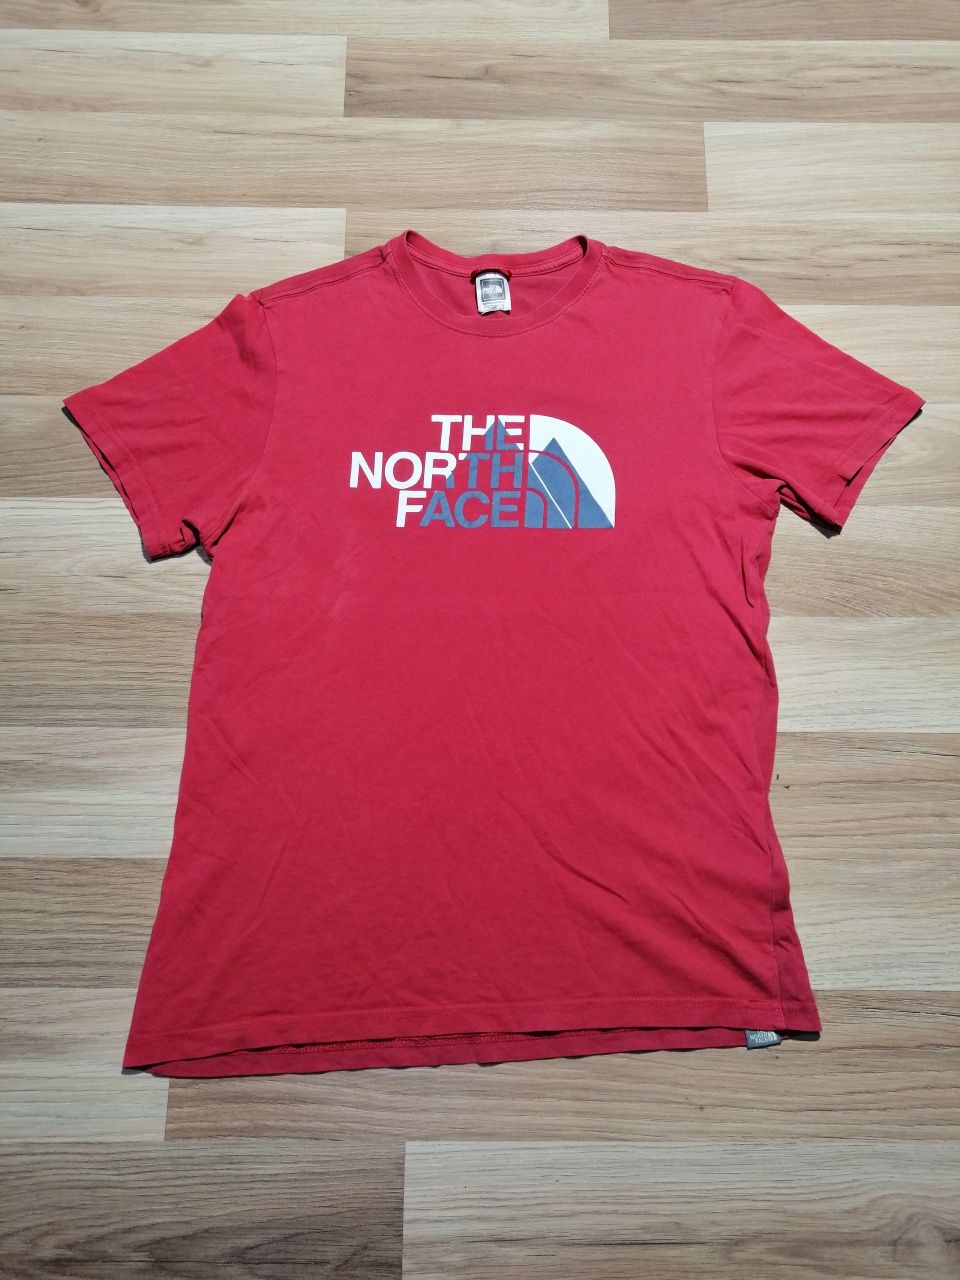 The North Face koszulka vintage w rozmiarze S